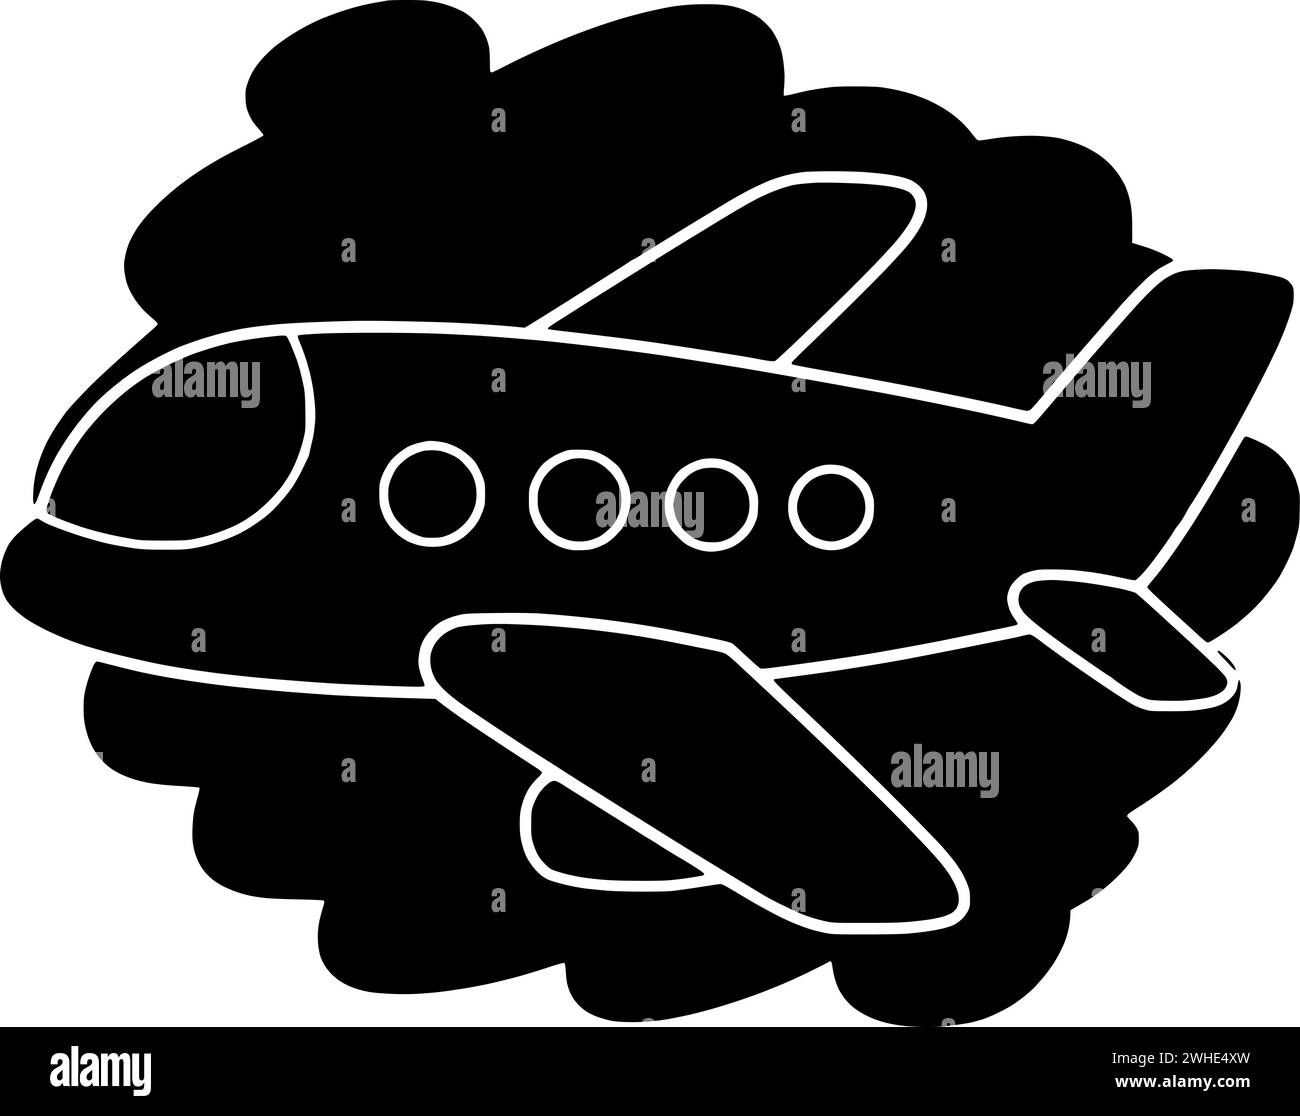 Flugzeug Illustration Fliege Silhouette Reise Logo Tourismus Icon Flugzeug Umriss Himmel Luftfahrt Transport Luftflugzeug Flug Business Transport Jet Form Reise Passagier Stock Vektor